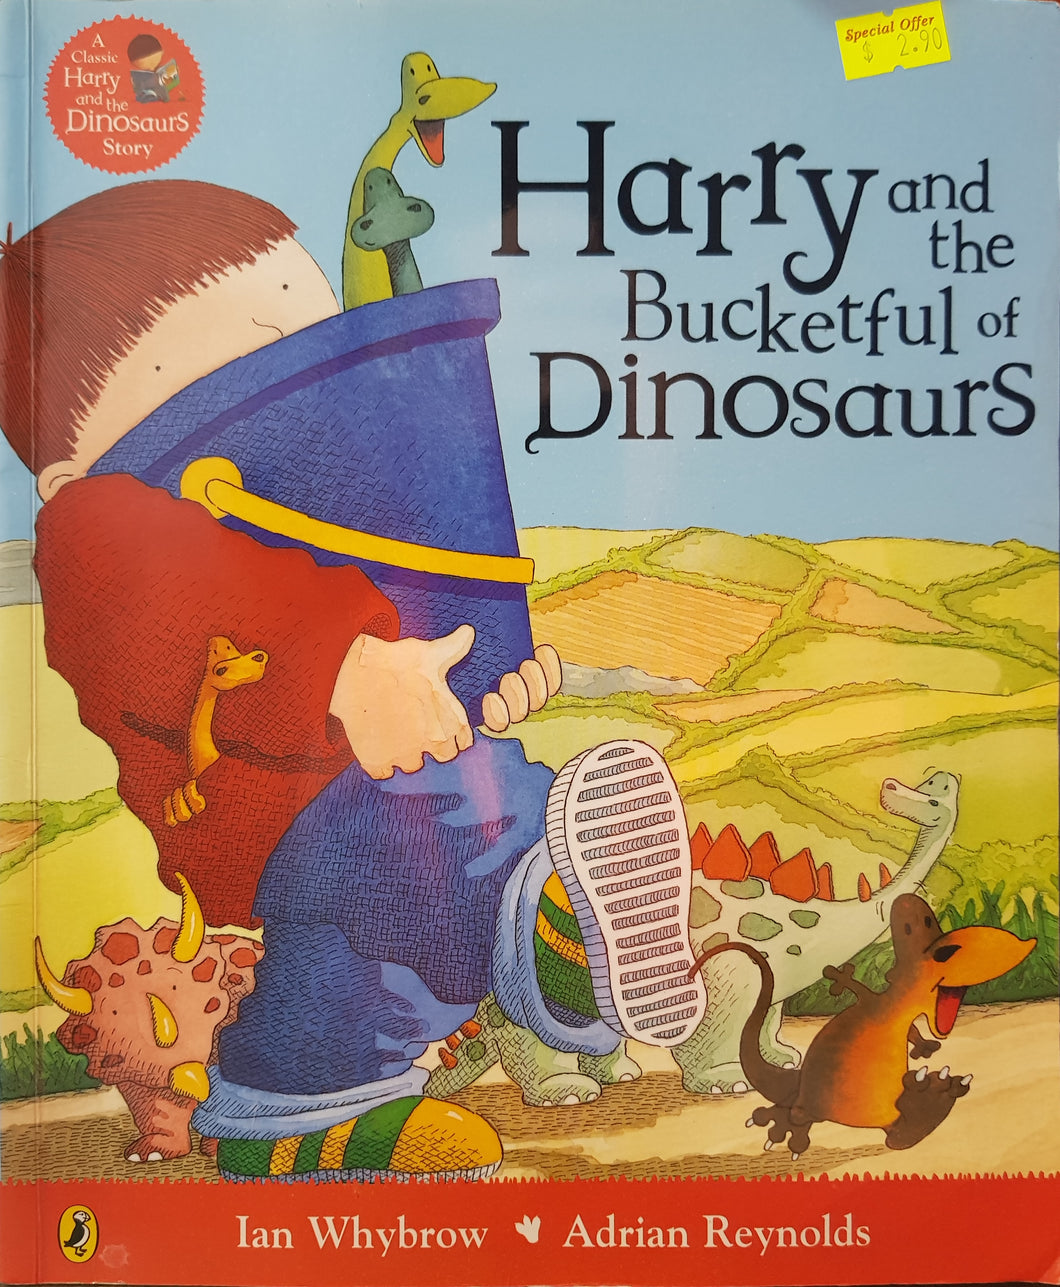 Harry and Bucketful of Dinosaurs - Ian Whybrow & Adrian Reynolds